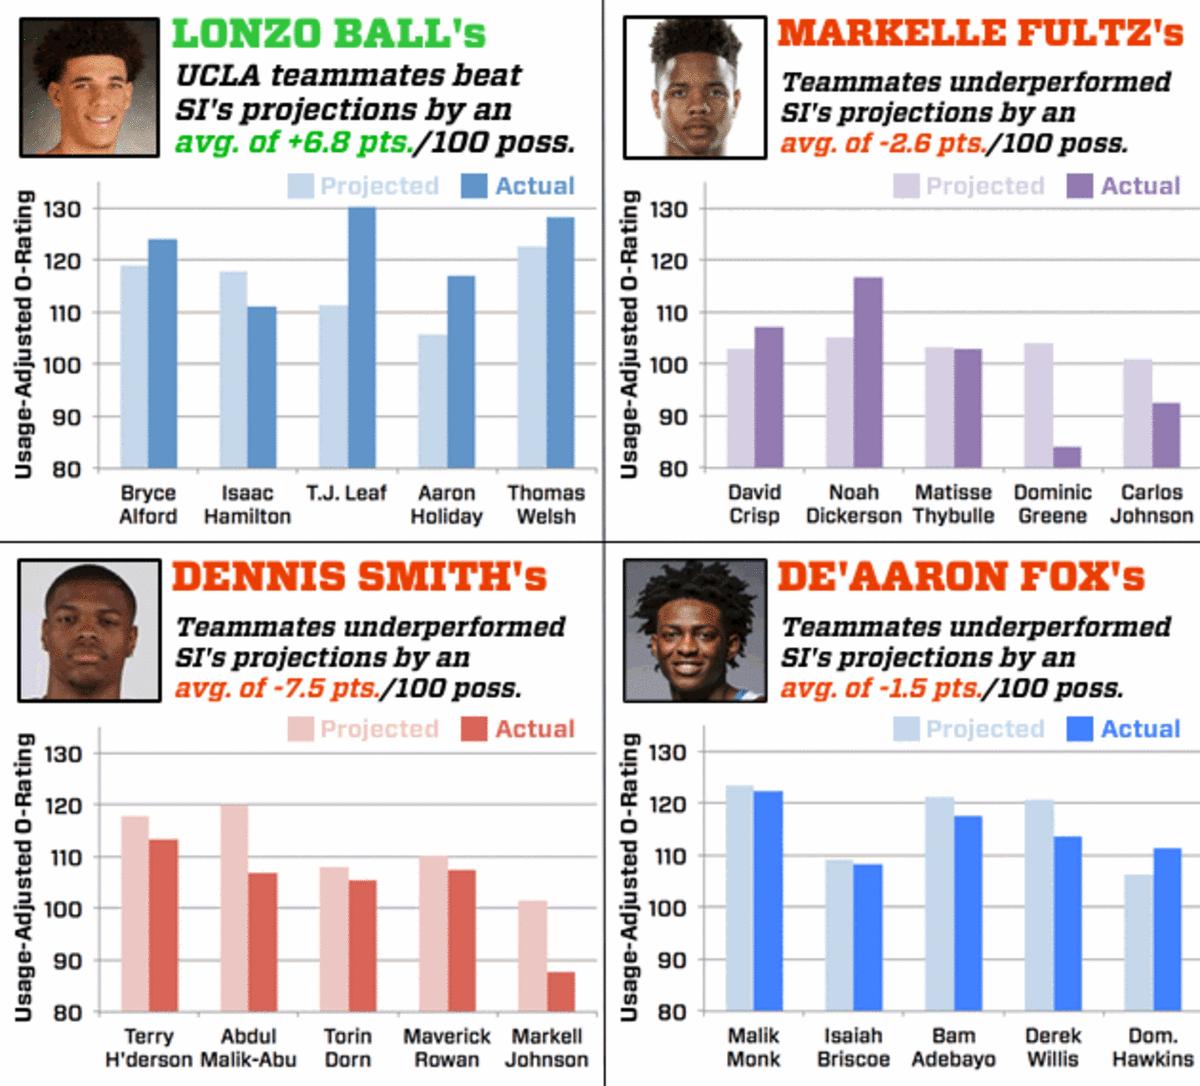 Lonzo Ball: Draft Profile and Stats